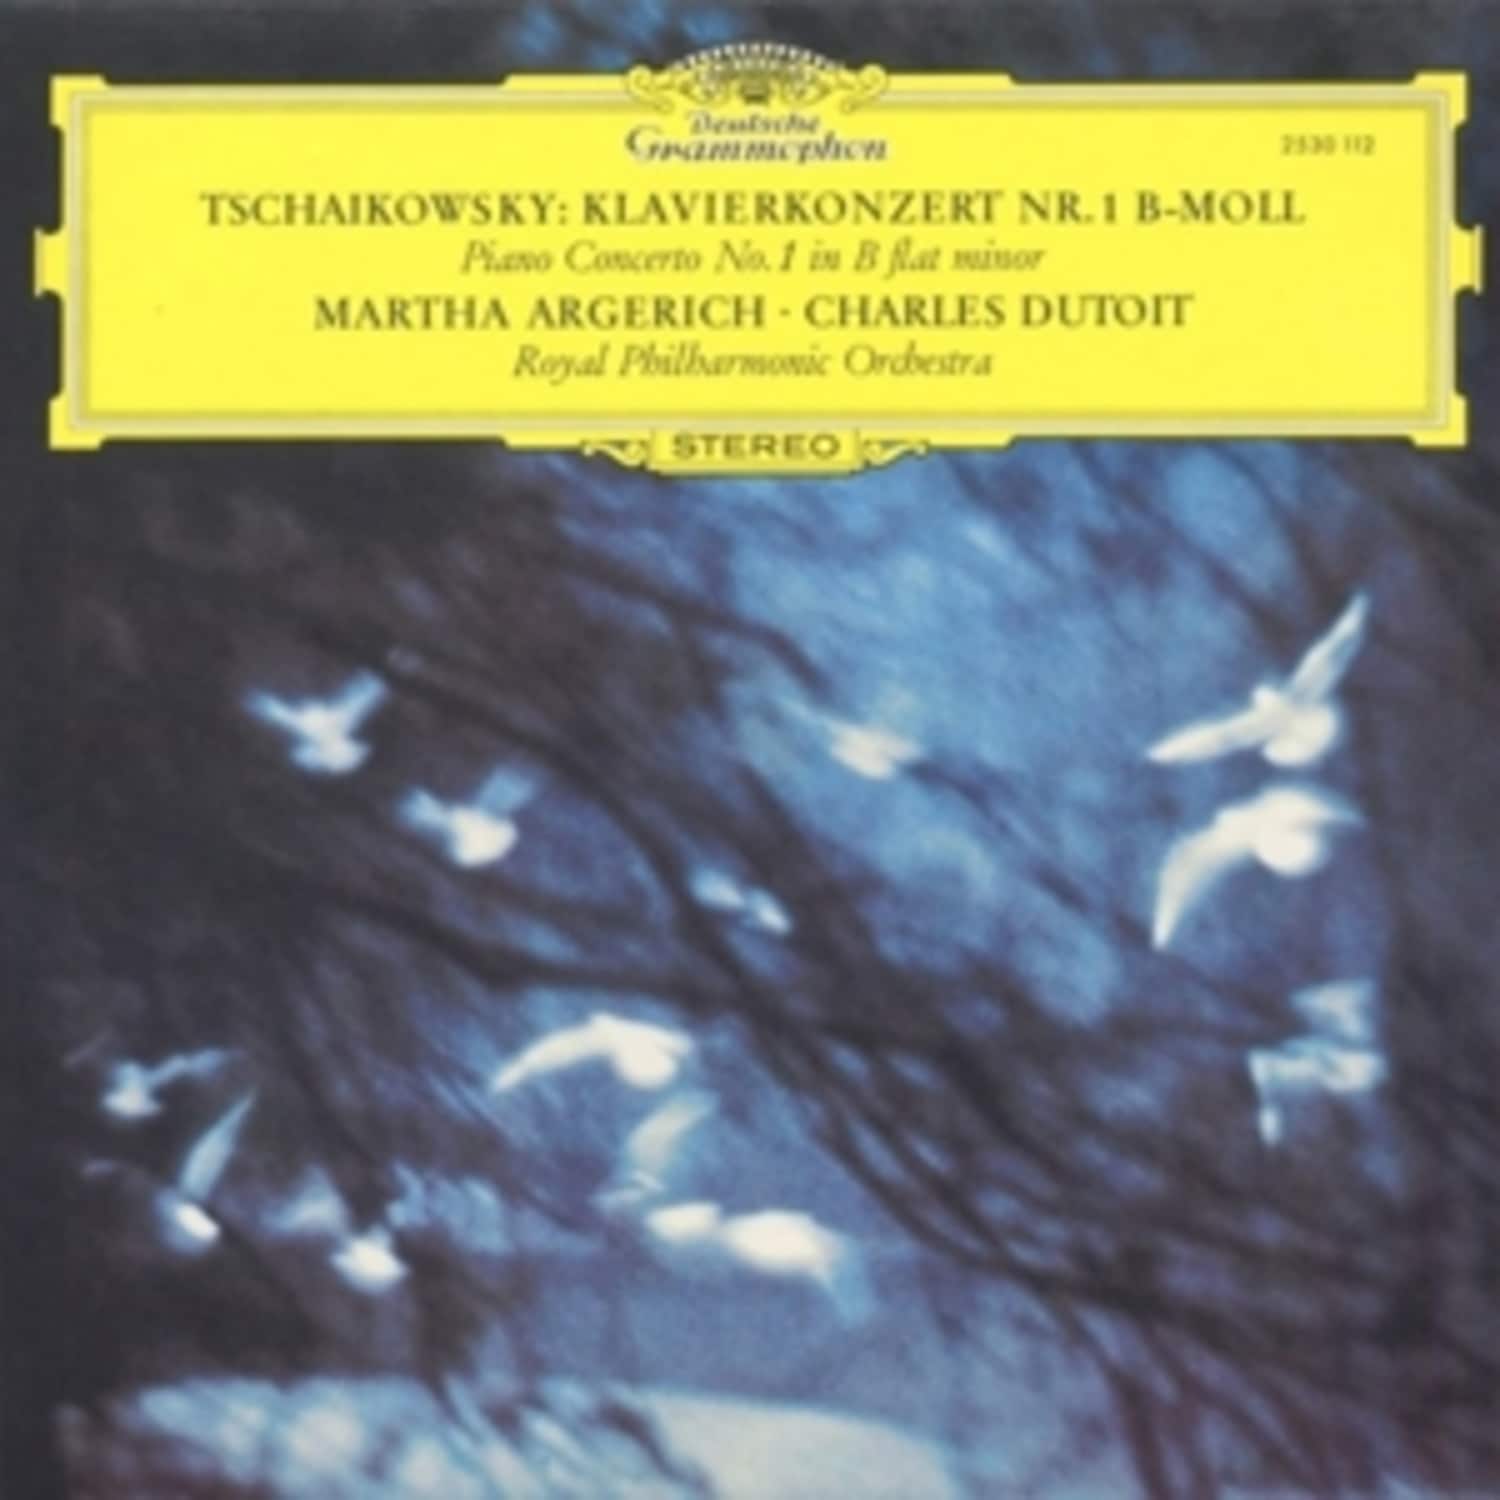 Martha Argerich / Charles Dutoit / Royal Philharmo - TSCHAIKOWSKY: KLAVIERKONZERT 1 B-MOLL 